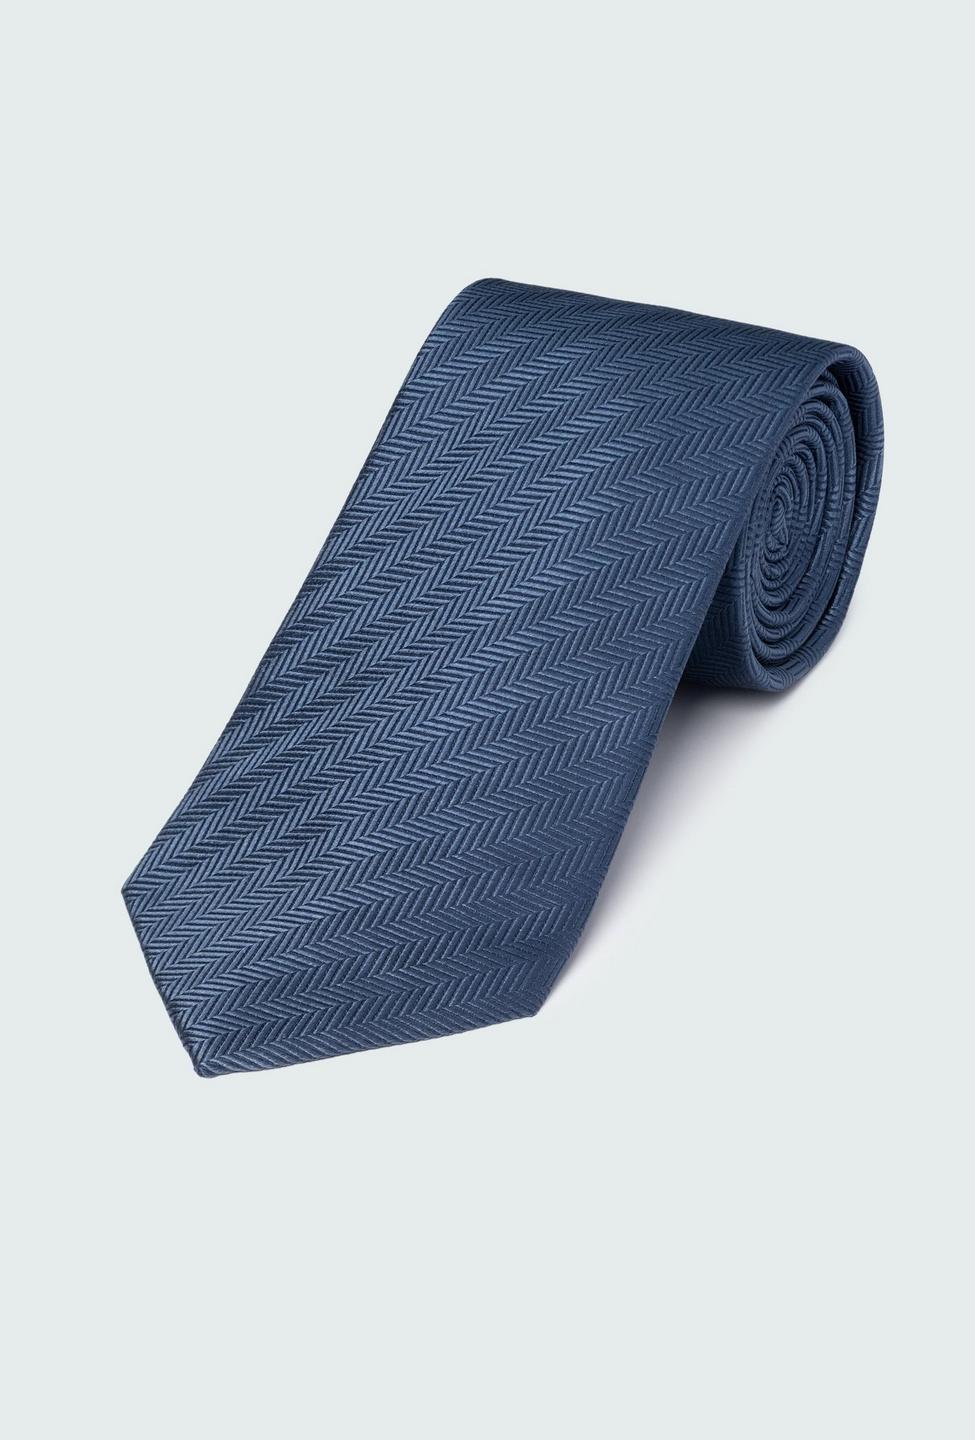 Blue tie - Herringbone Design from Indochino Collection